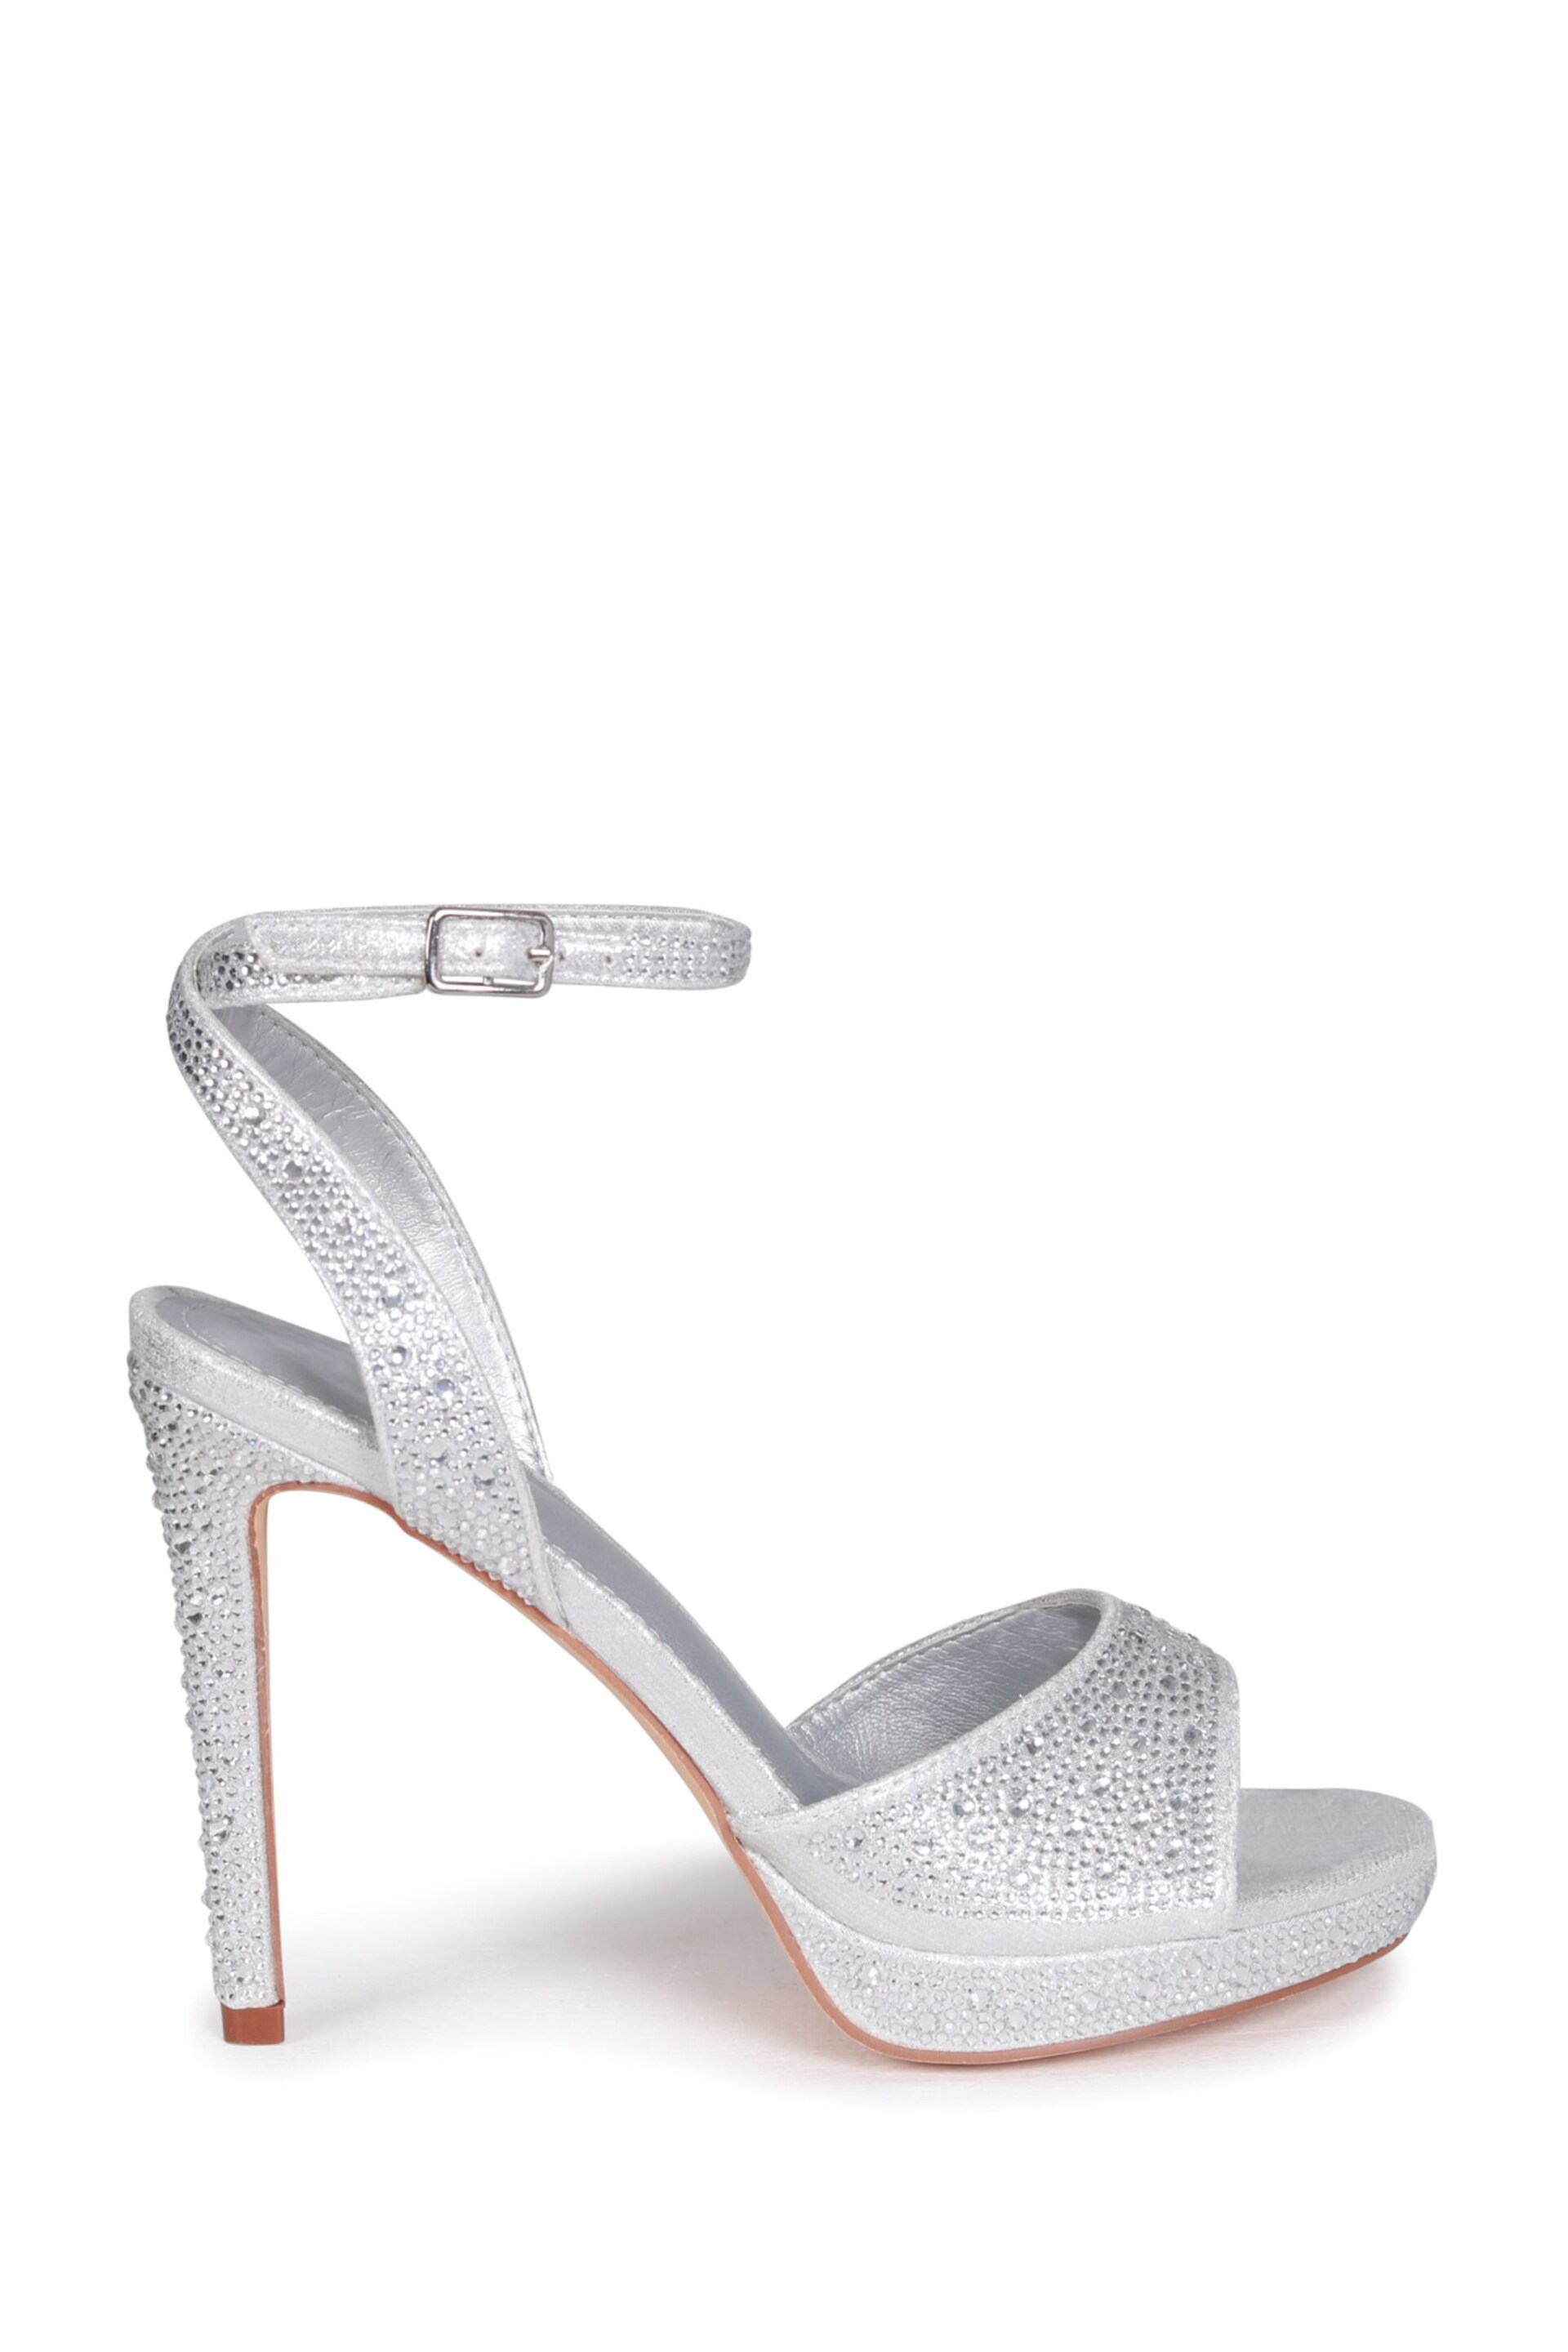 Linzi Silver Roulie Diamante Platform Stiletto Heeled Sandals - Image 2 of 4